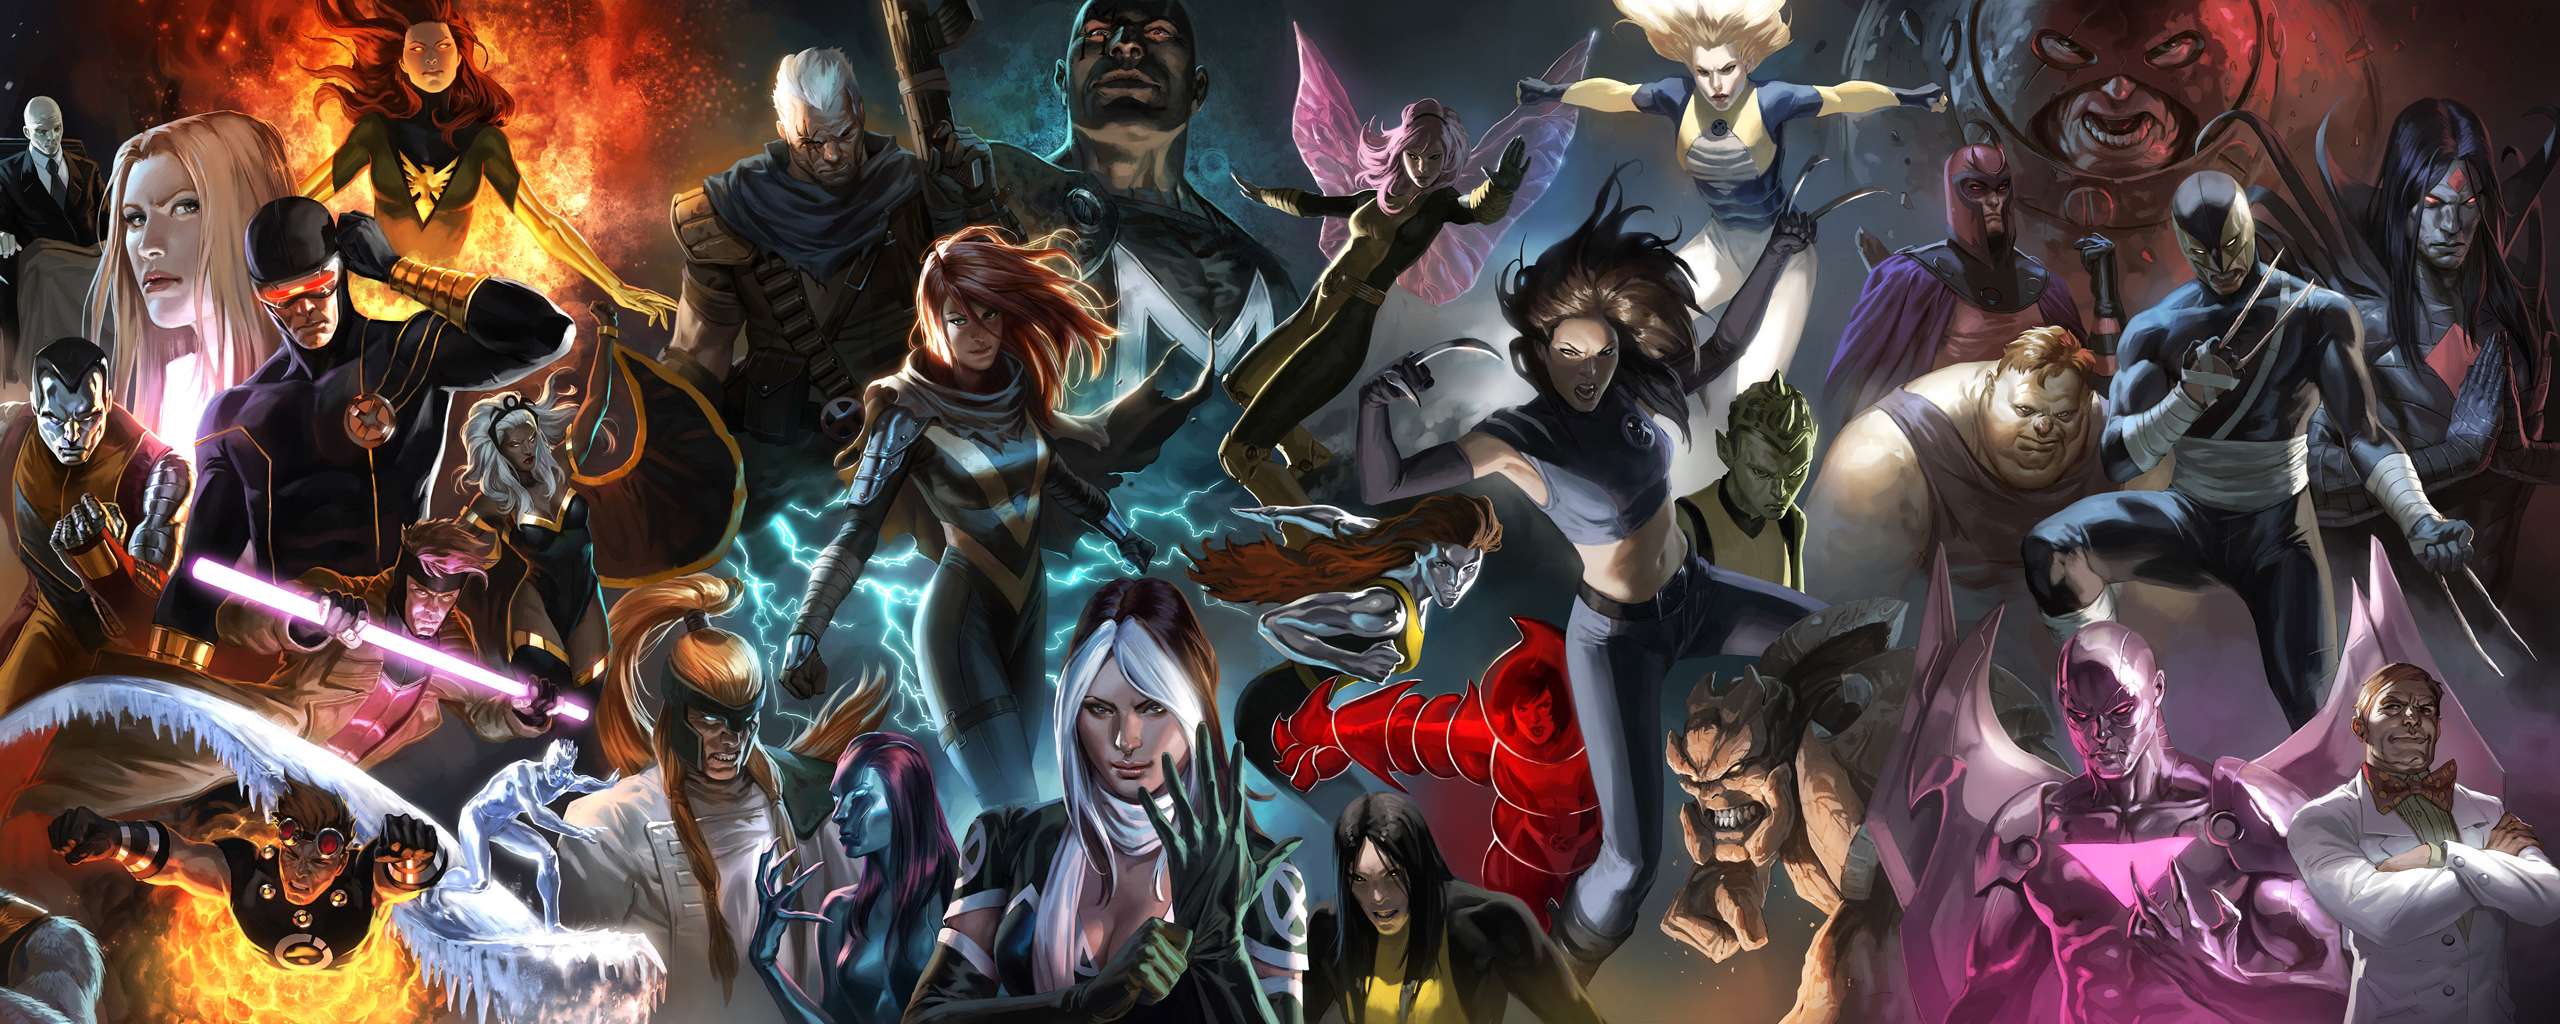 X-men Comic Wallpaper Related Keywords & Suggestions - X-men Comic ...